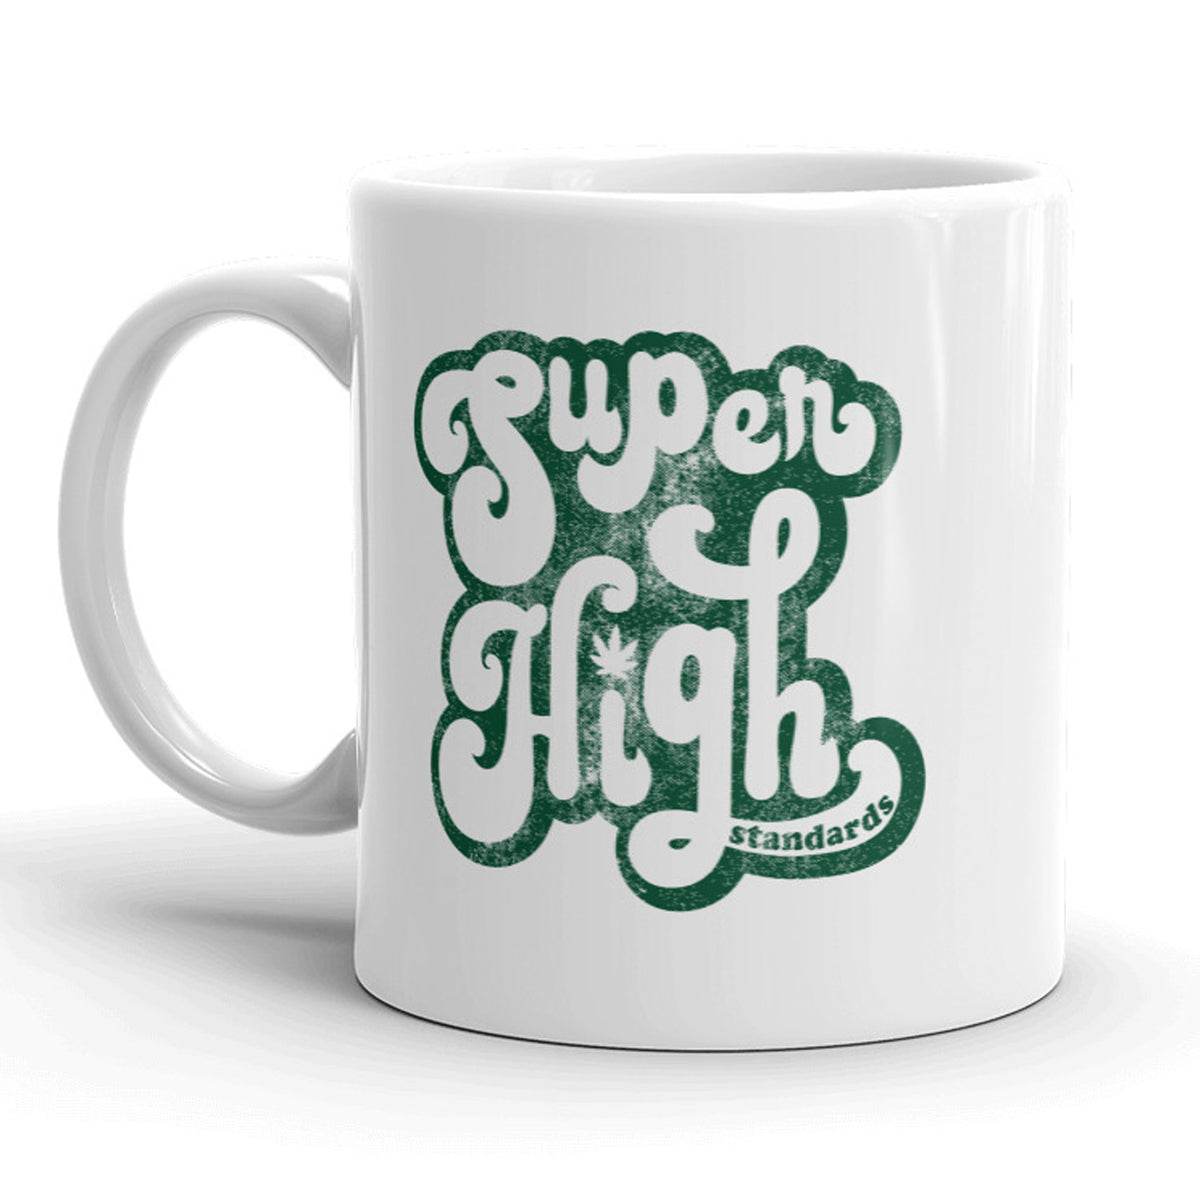 Funny White Super High Standards Coffee Mug Nerdy 420 Tee